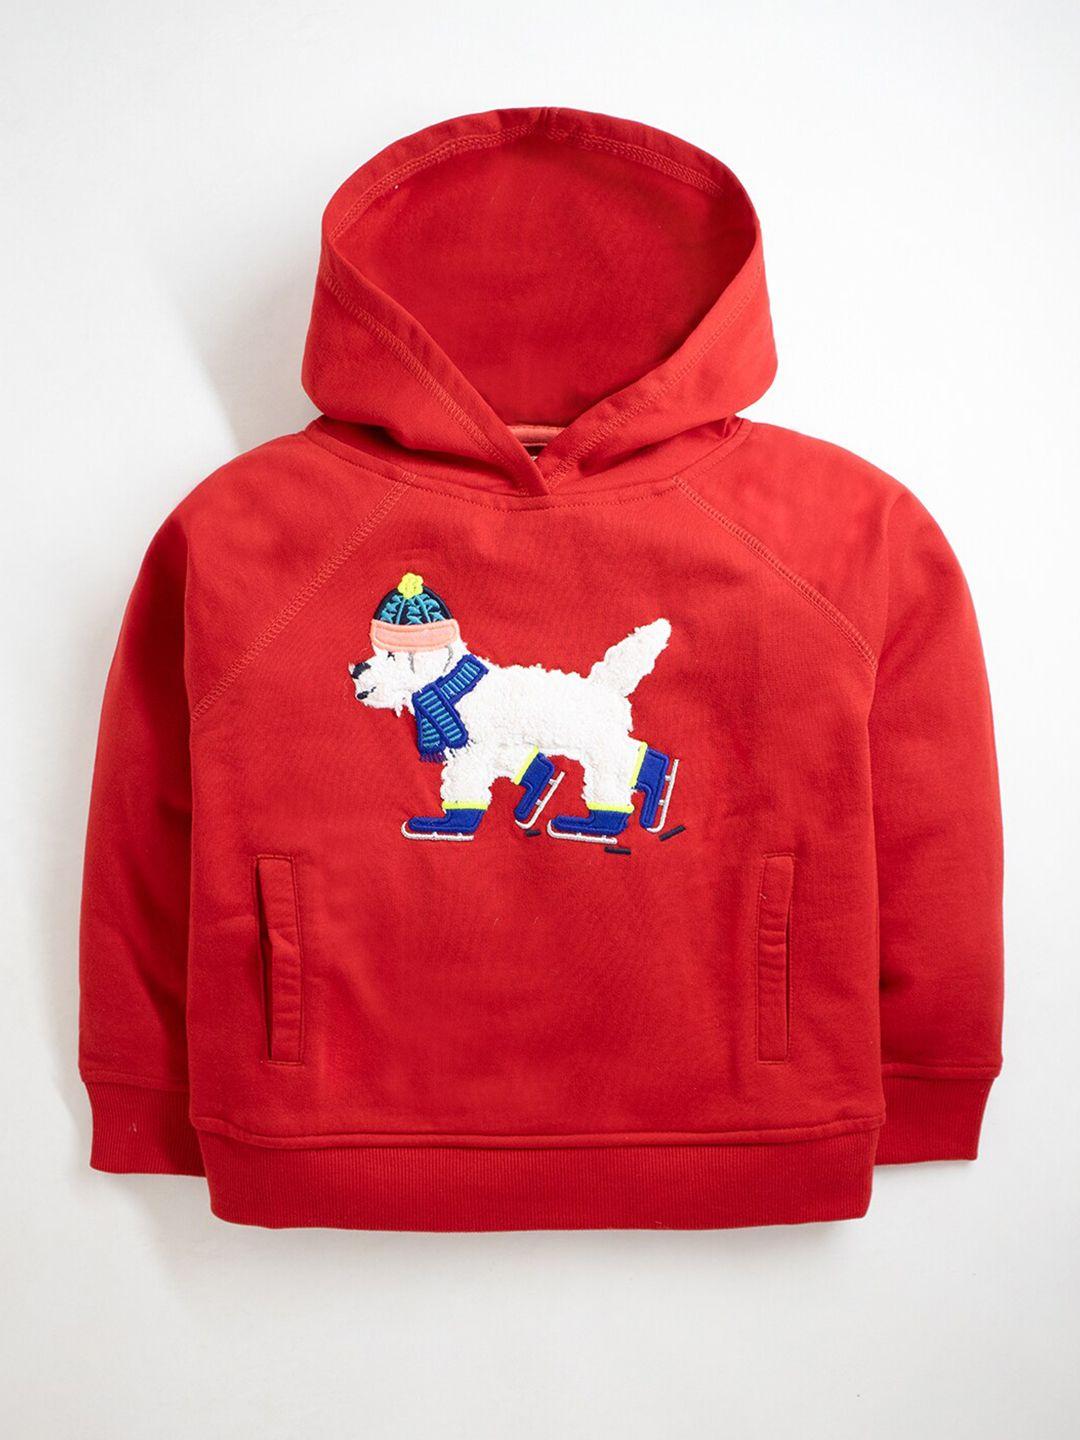 cherry crumble unisex kids red embellished hooded sweatshirt